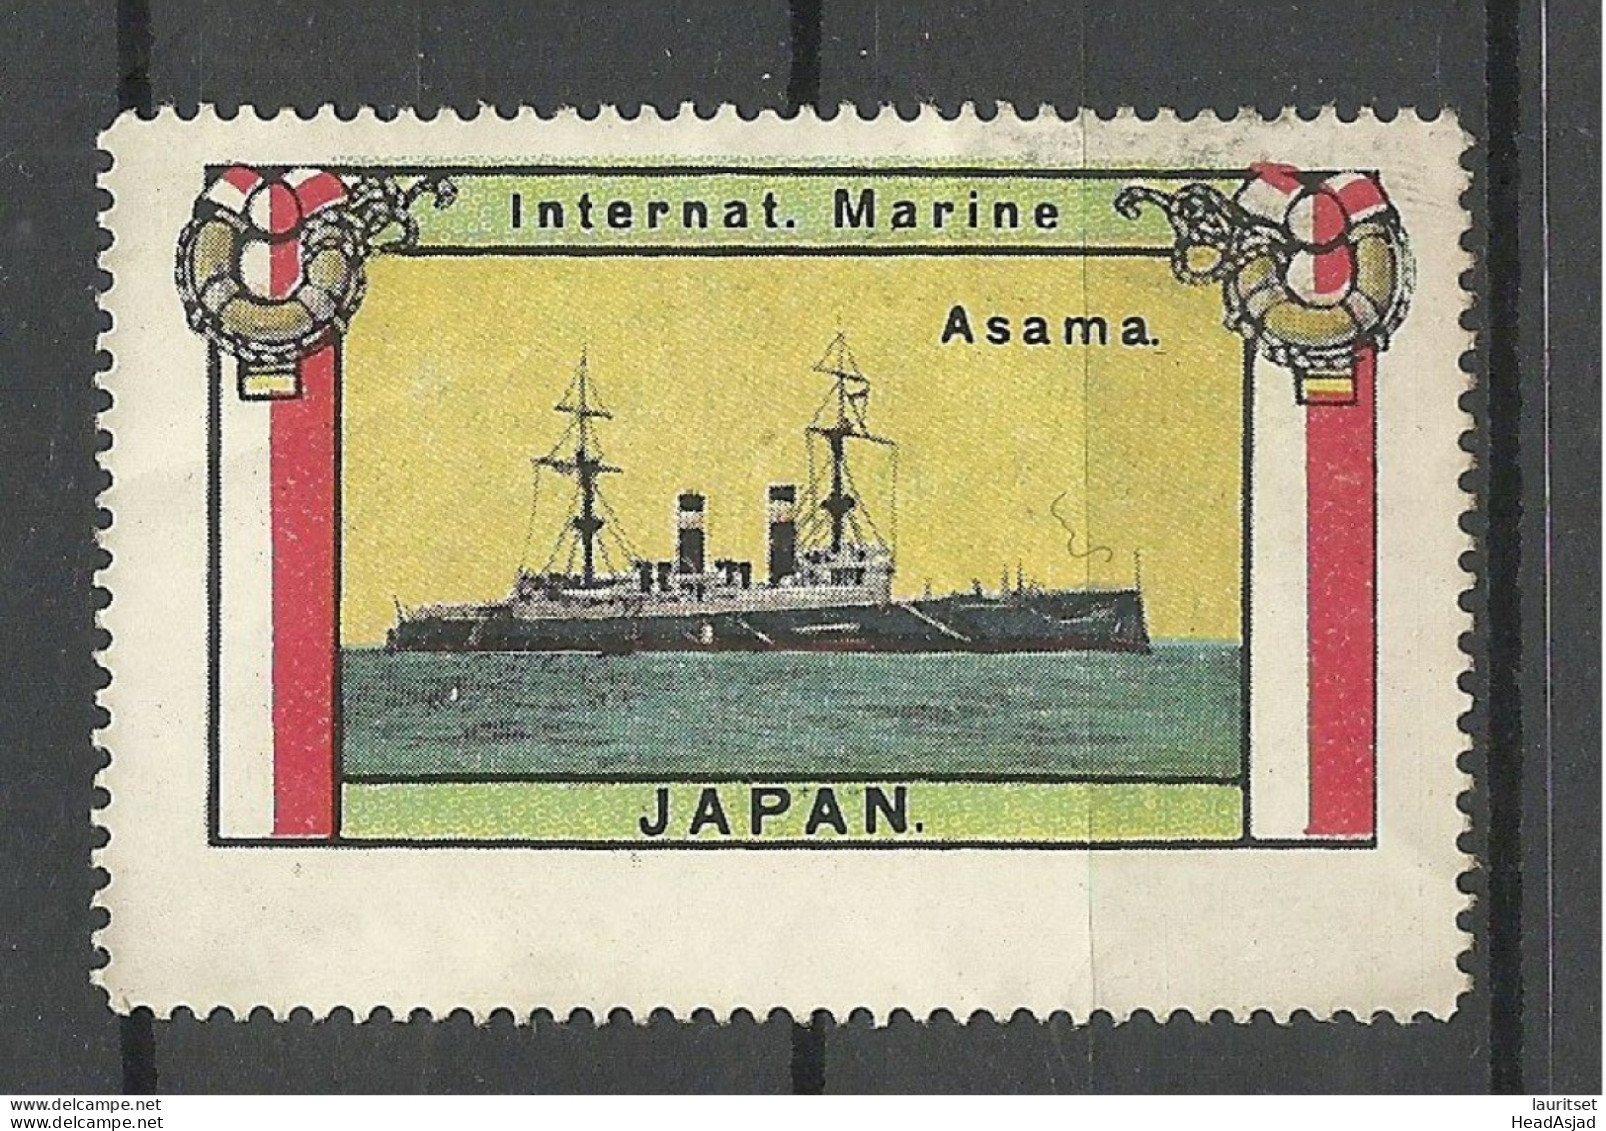 JAPAN NIPPON Intern. Marine Der Schiff Ship ASAMA Vignette Poster Stamp (*) - Bateaux